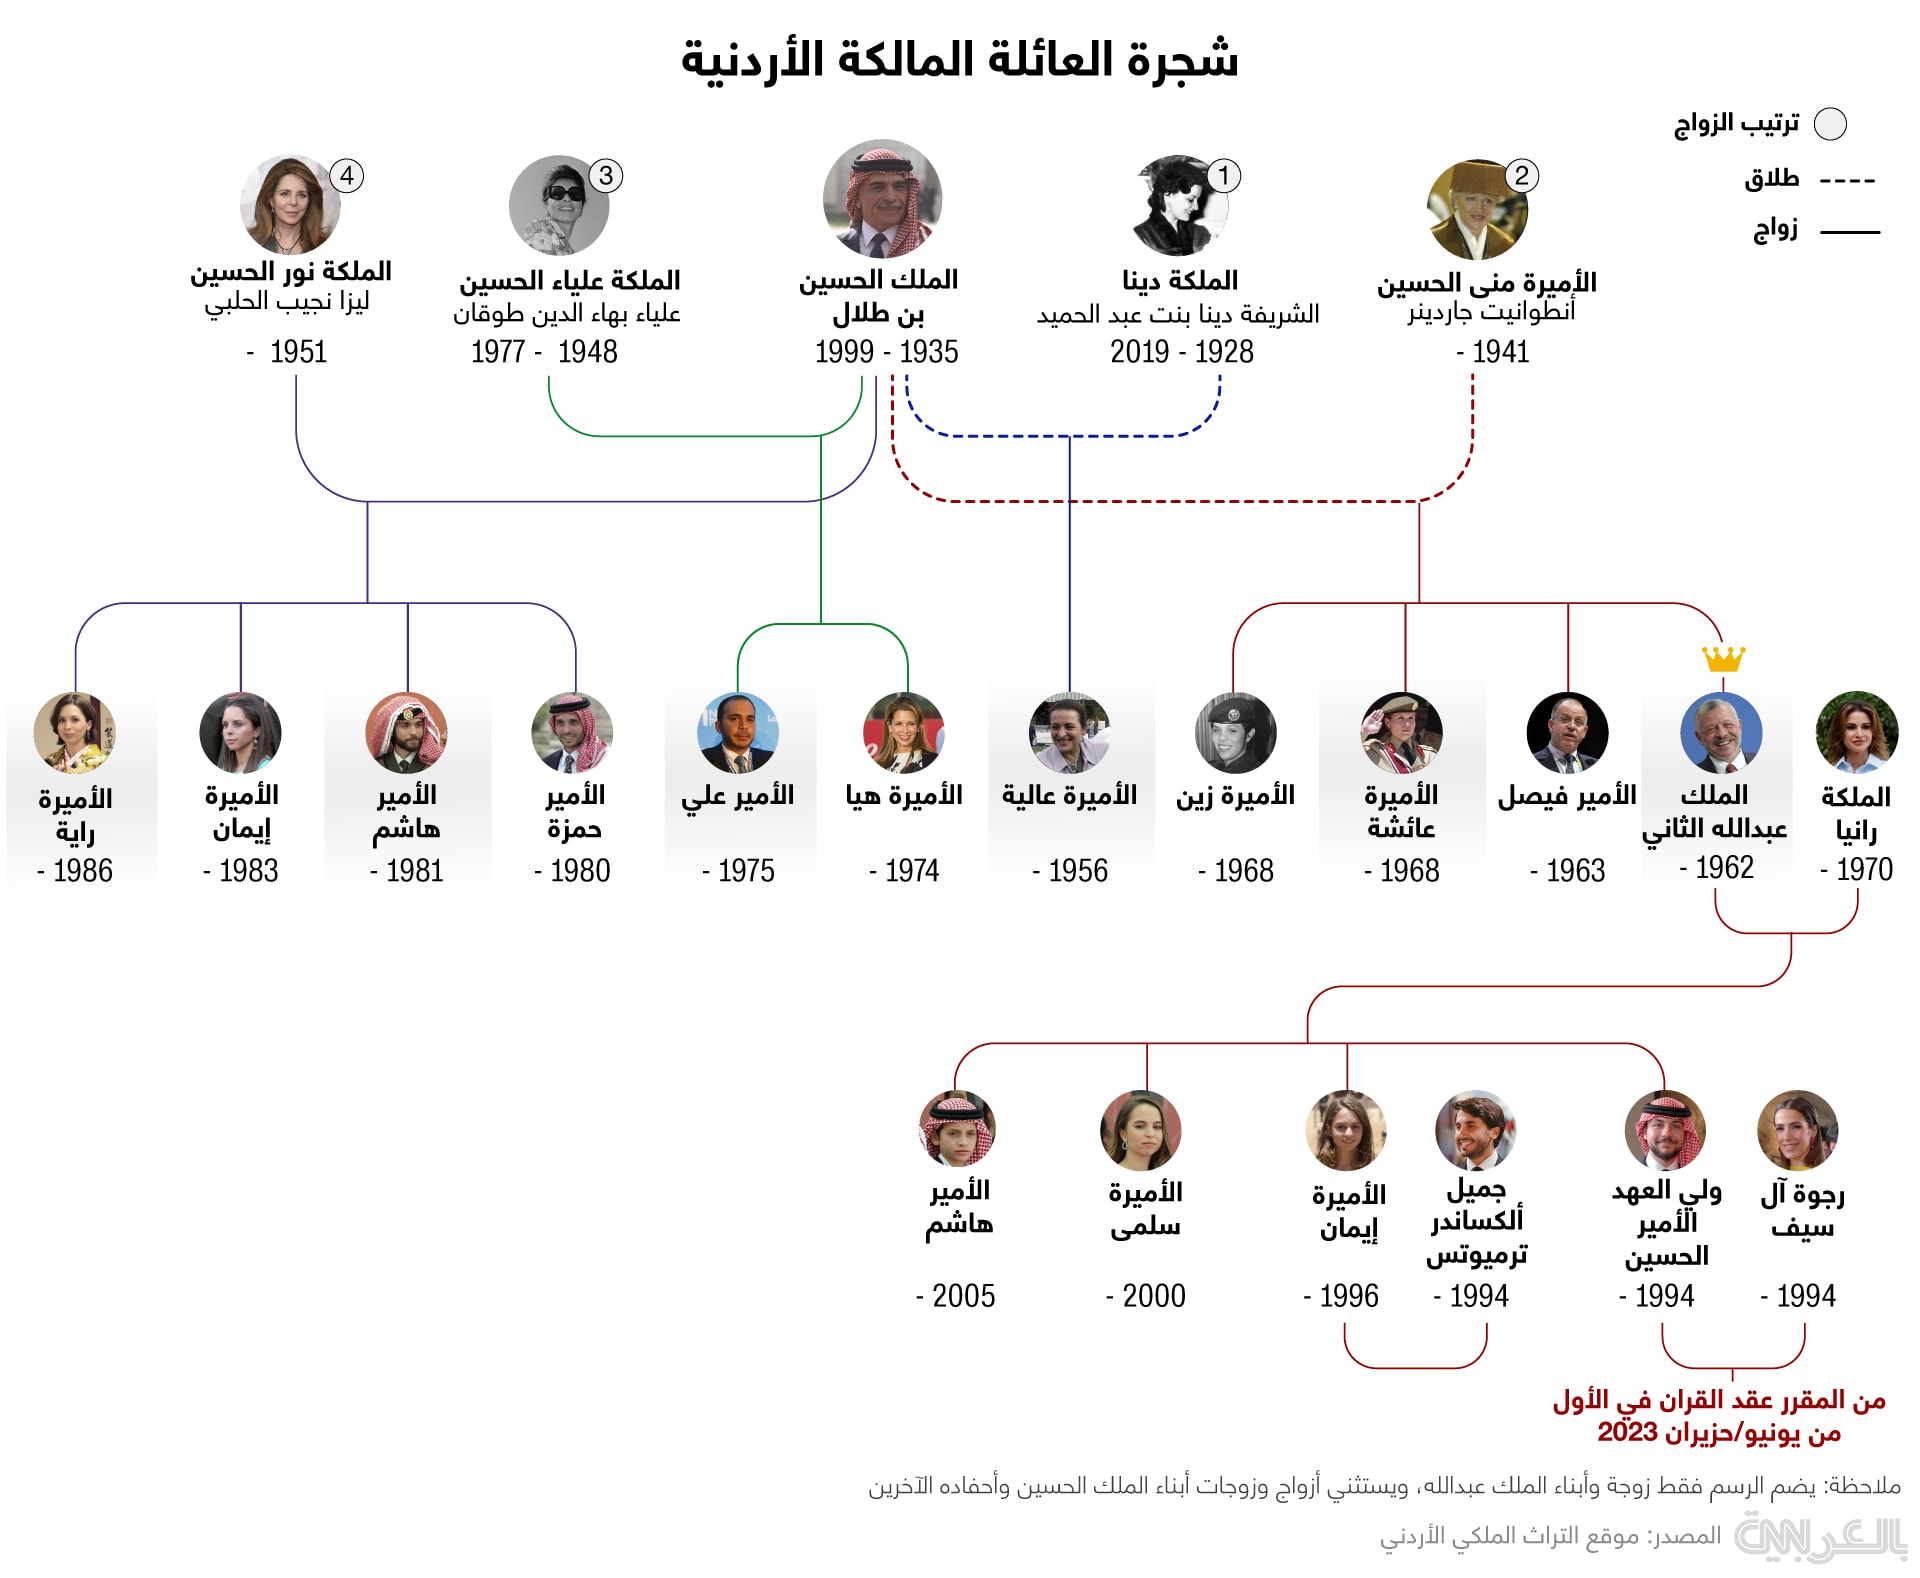 al-hussein-crown-prince-family-tree